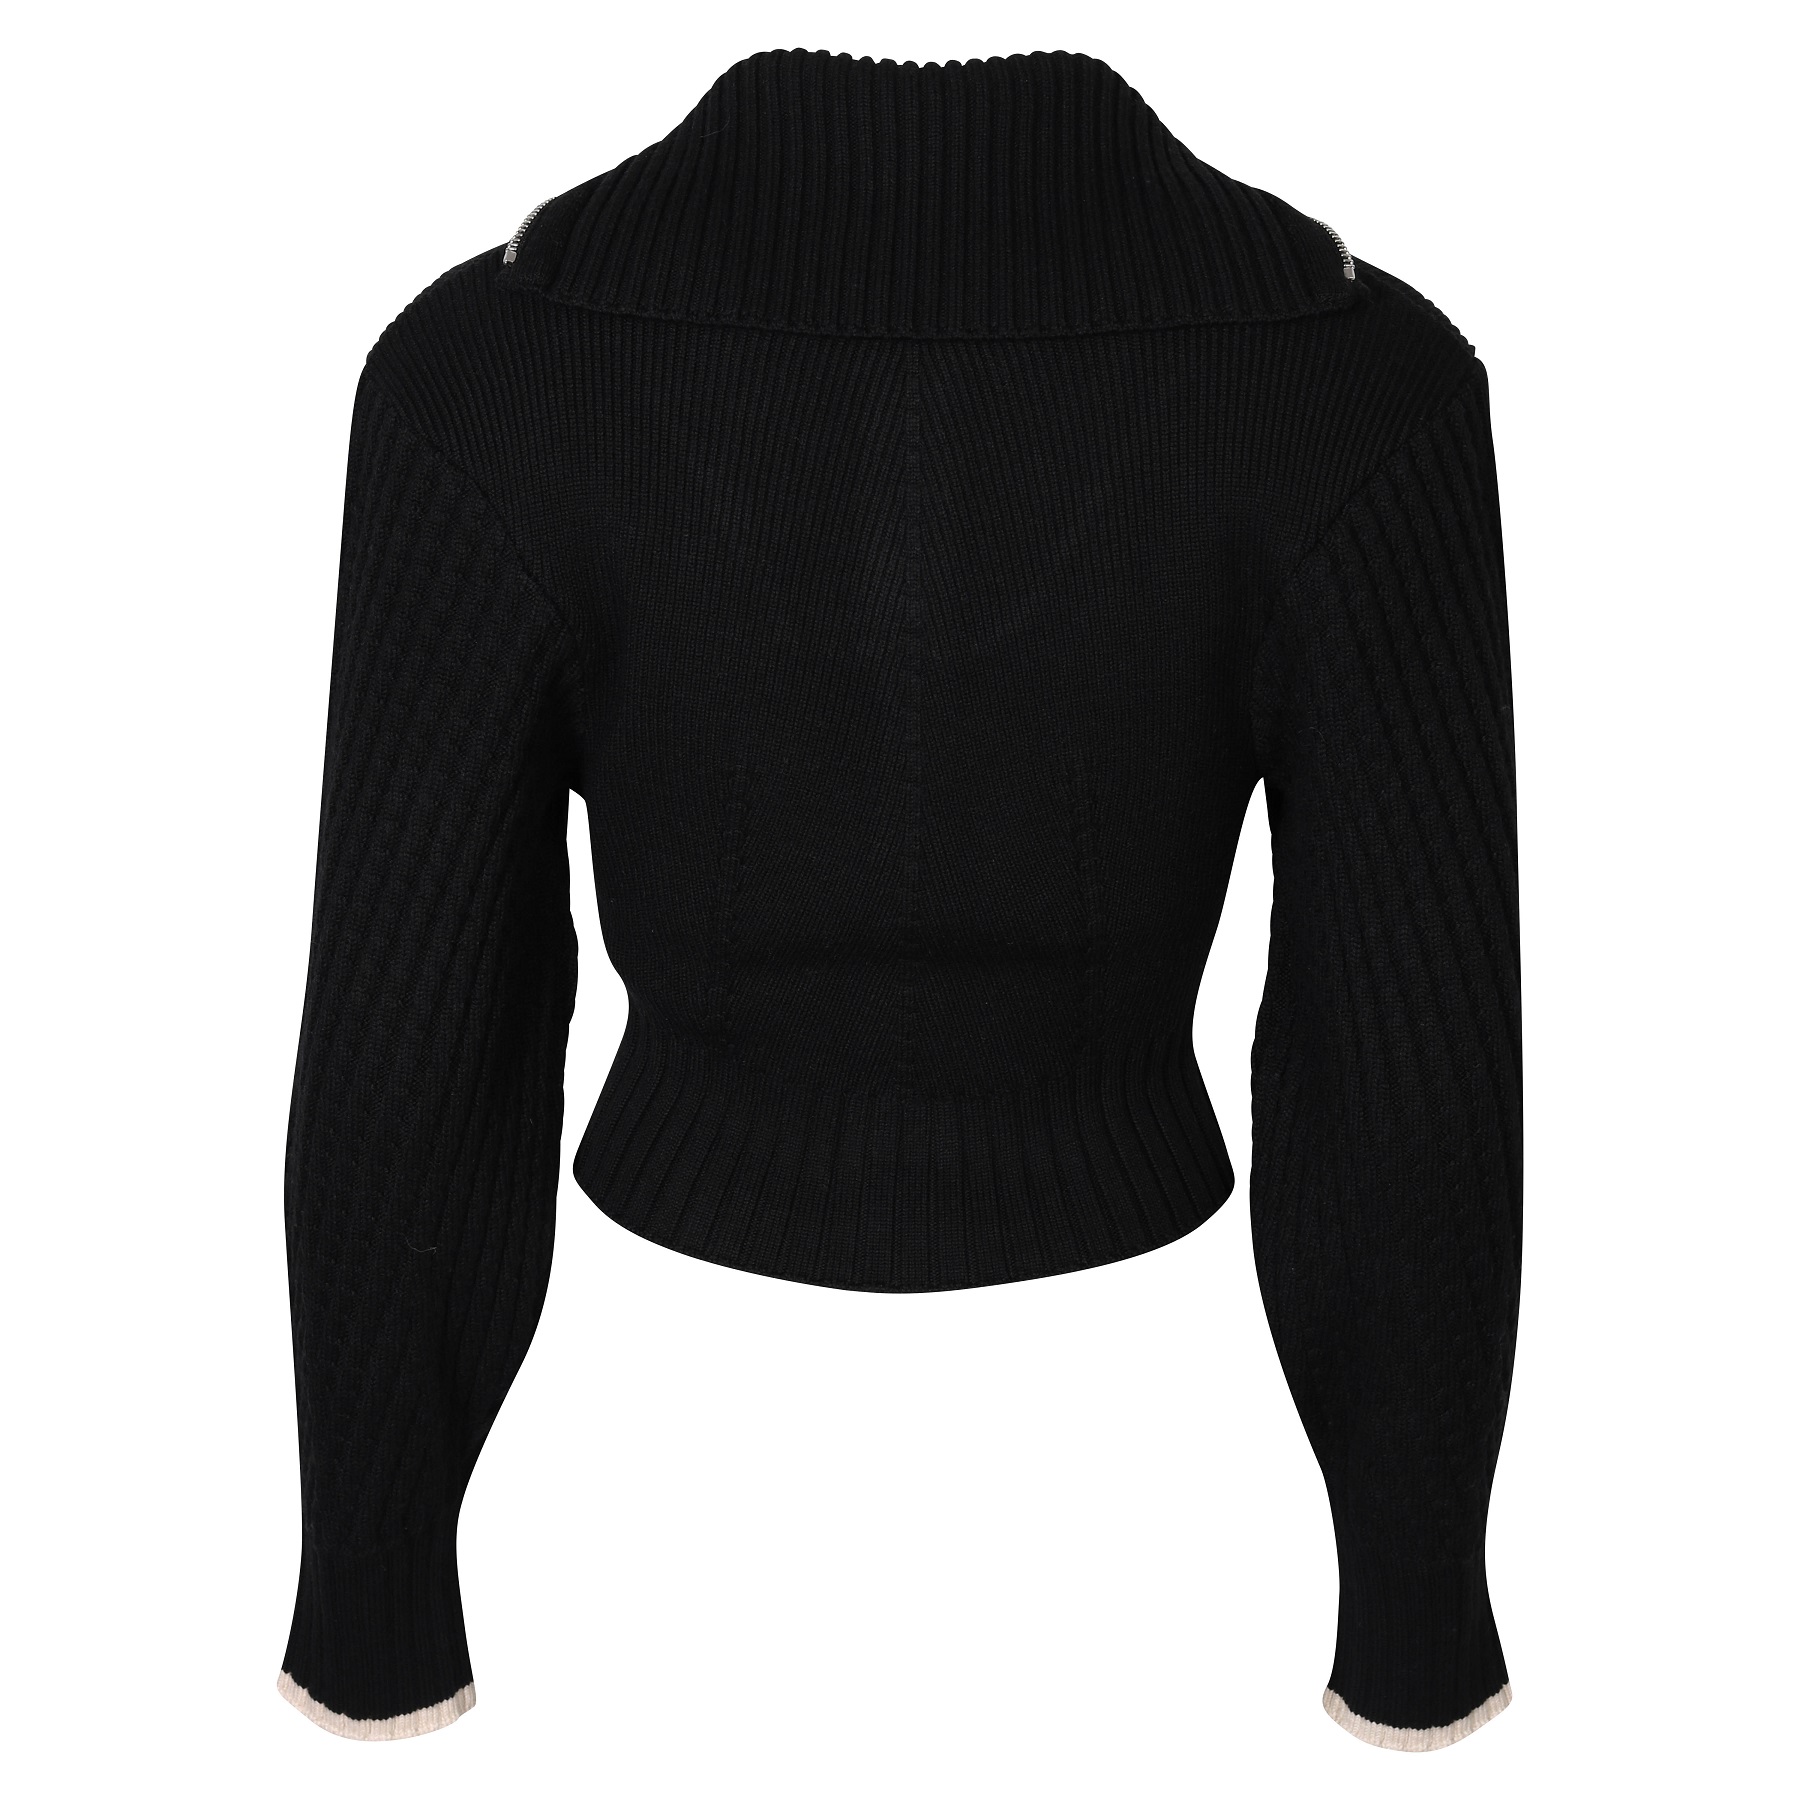 SOCIÉTÉ ANGELIQUE Merino Knit Zip Jacket with Big Shoulder